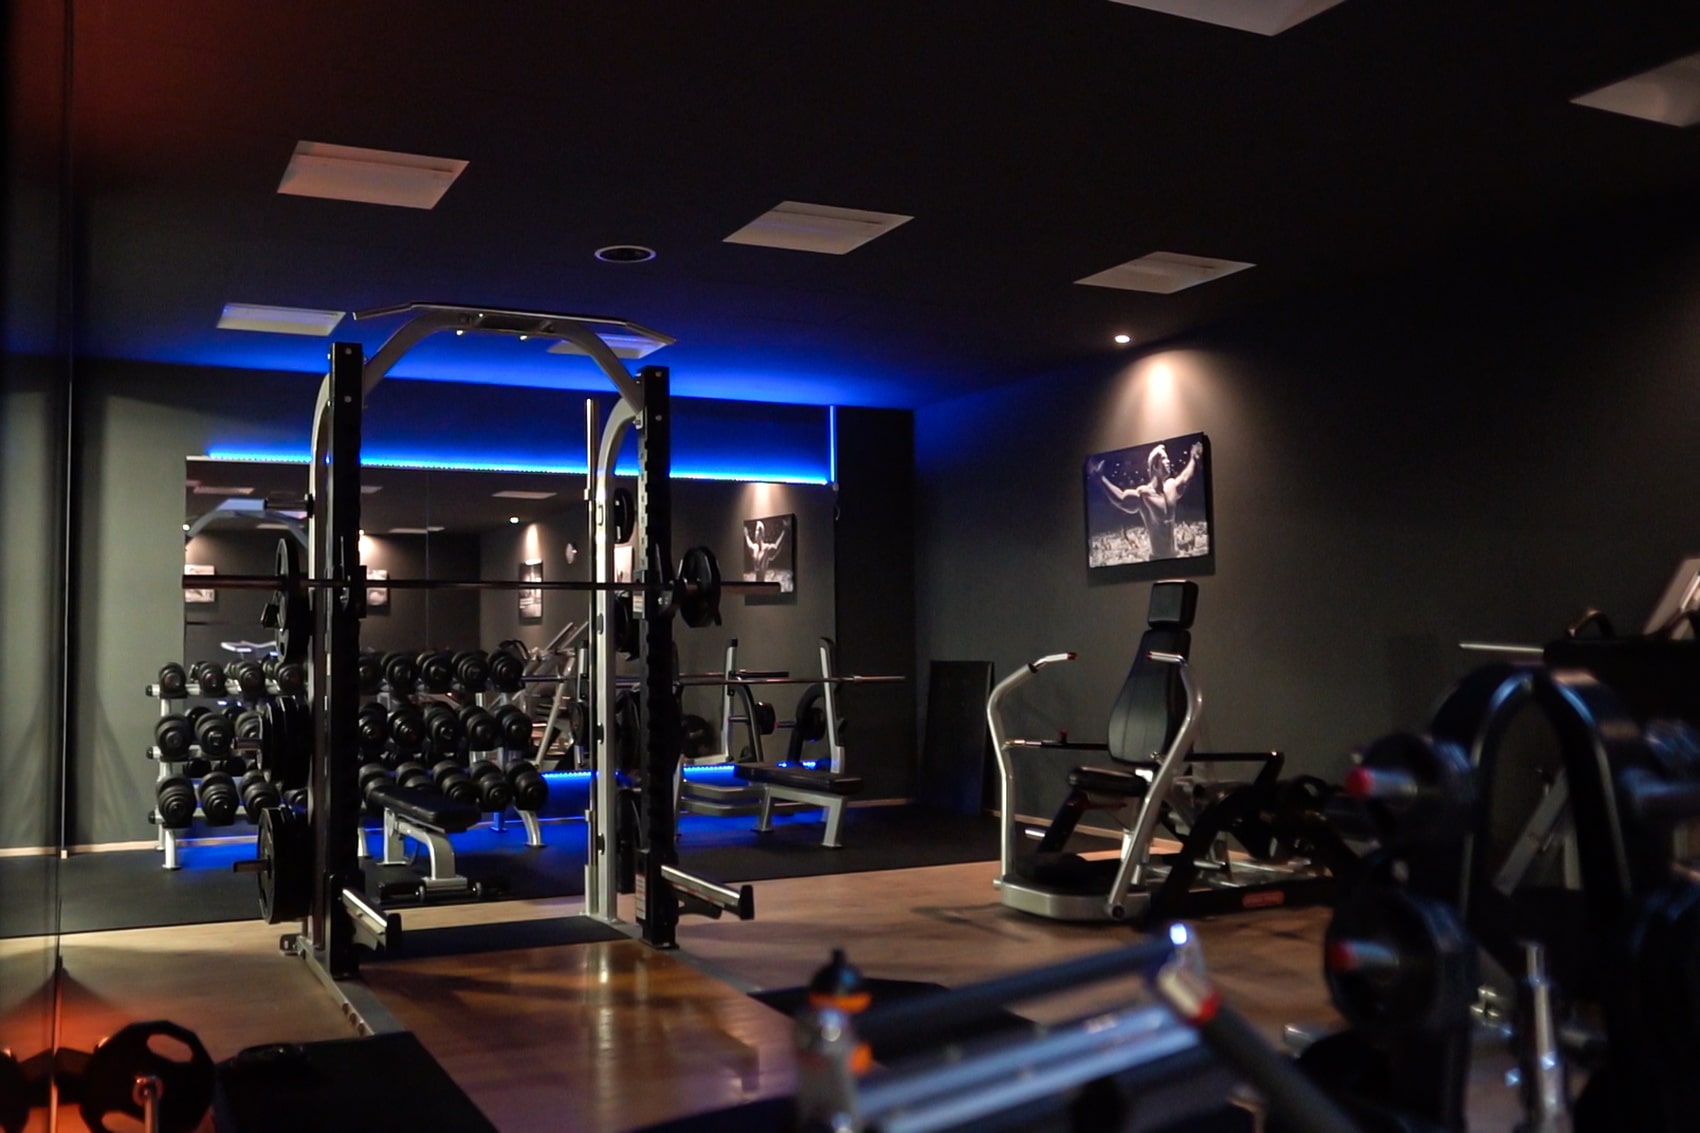 Das moderne Fitnesscenter "OSF-Club Fitnessstudio" in Buchholz